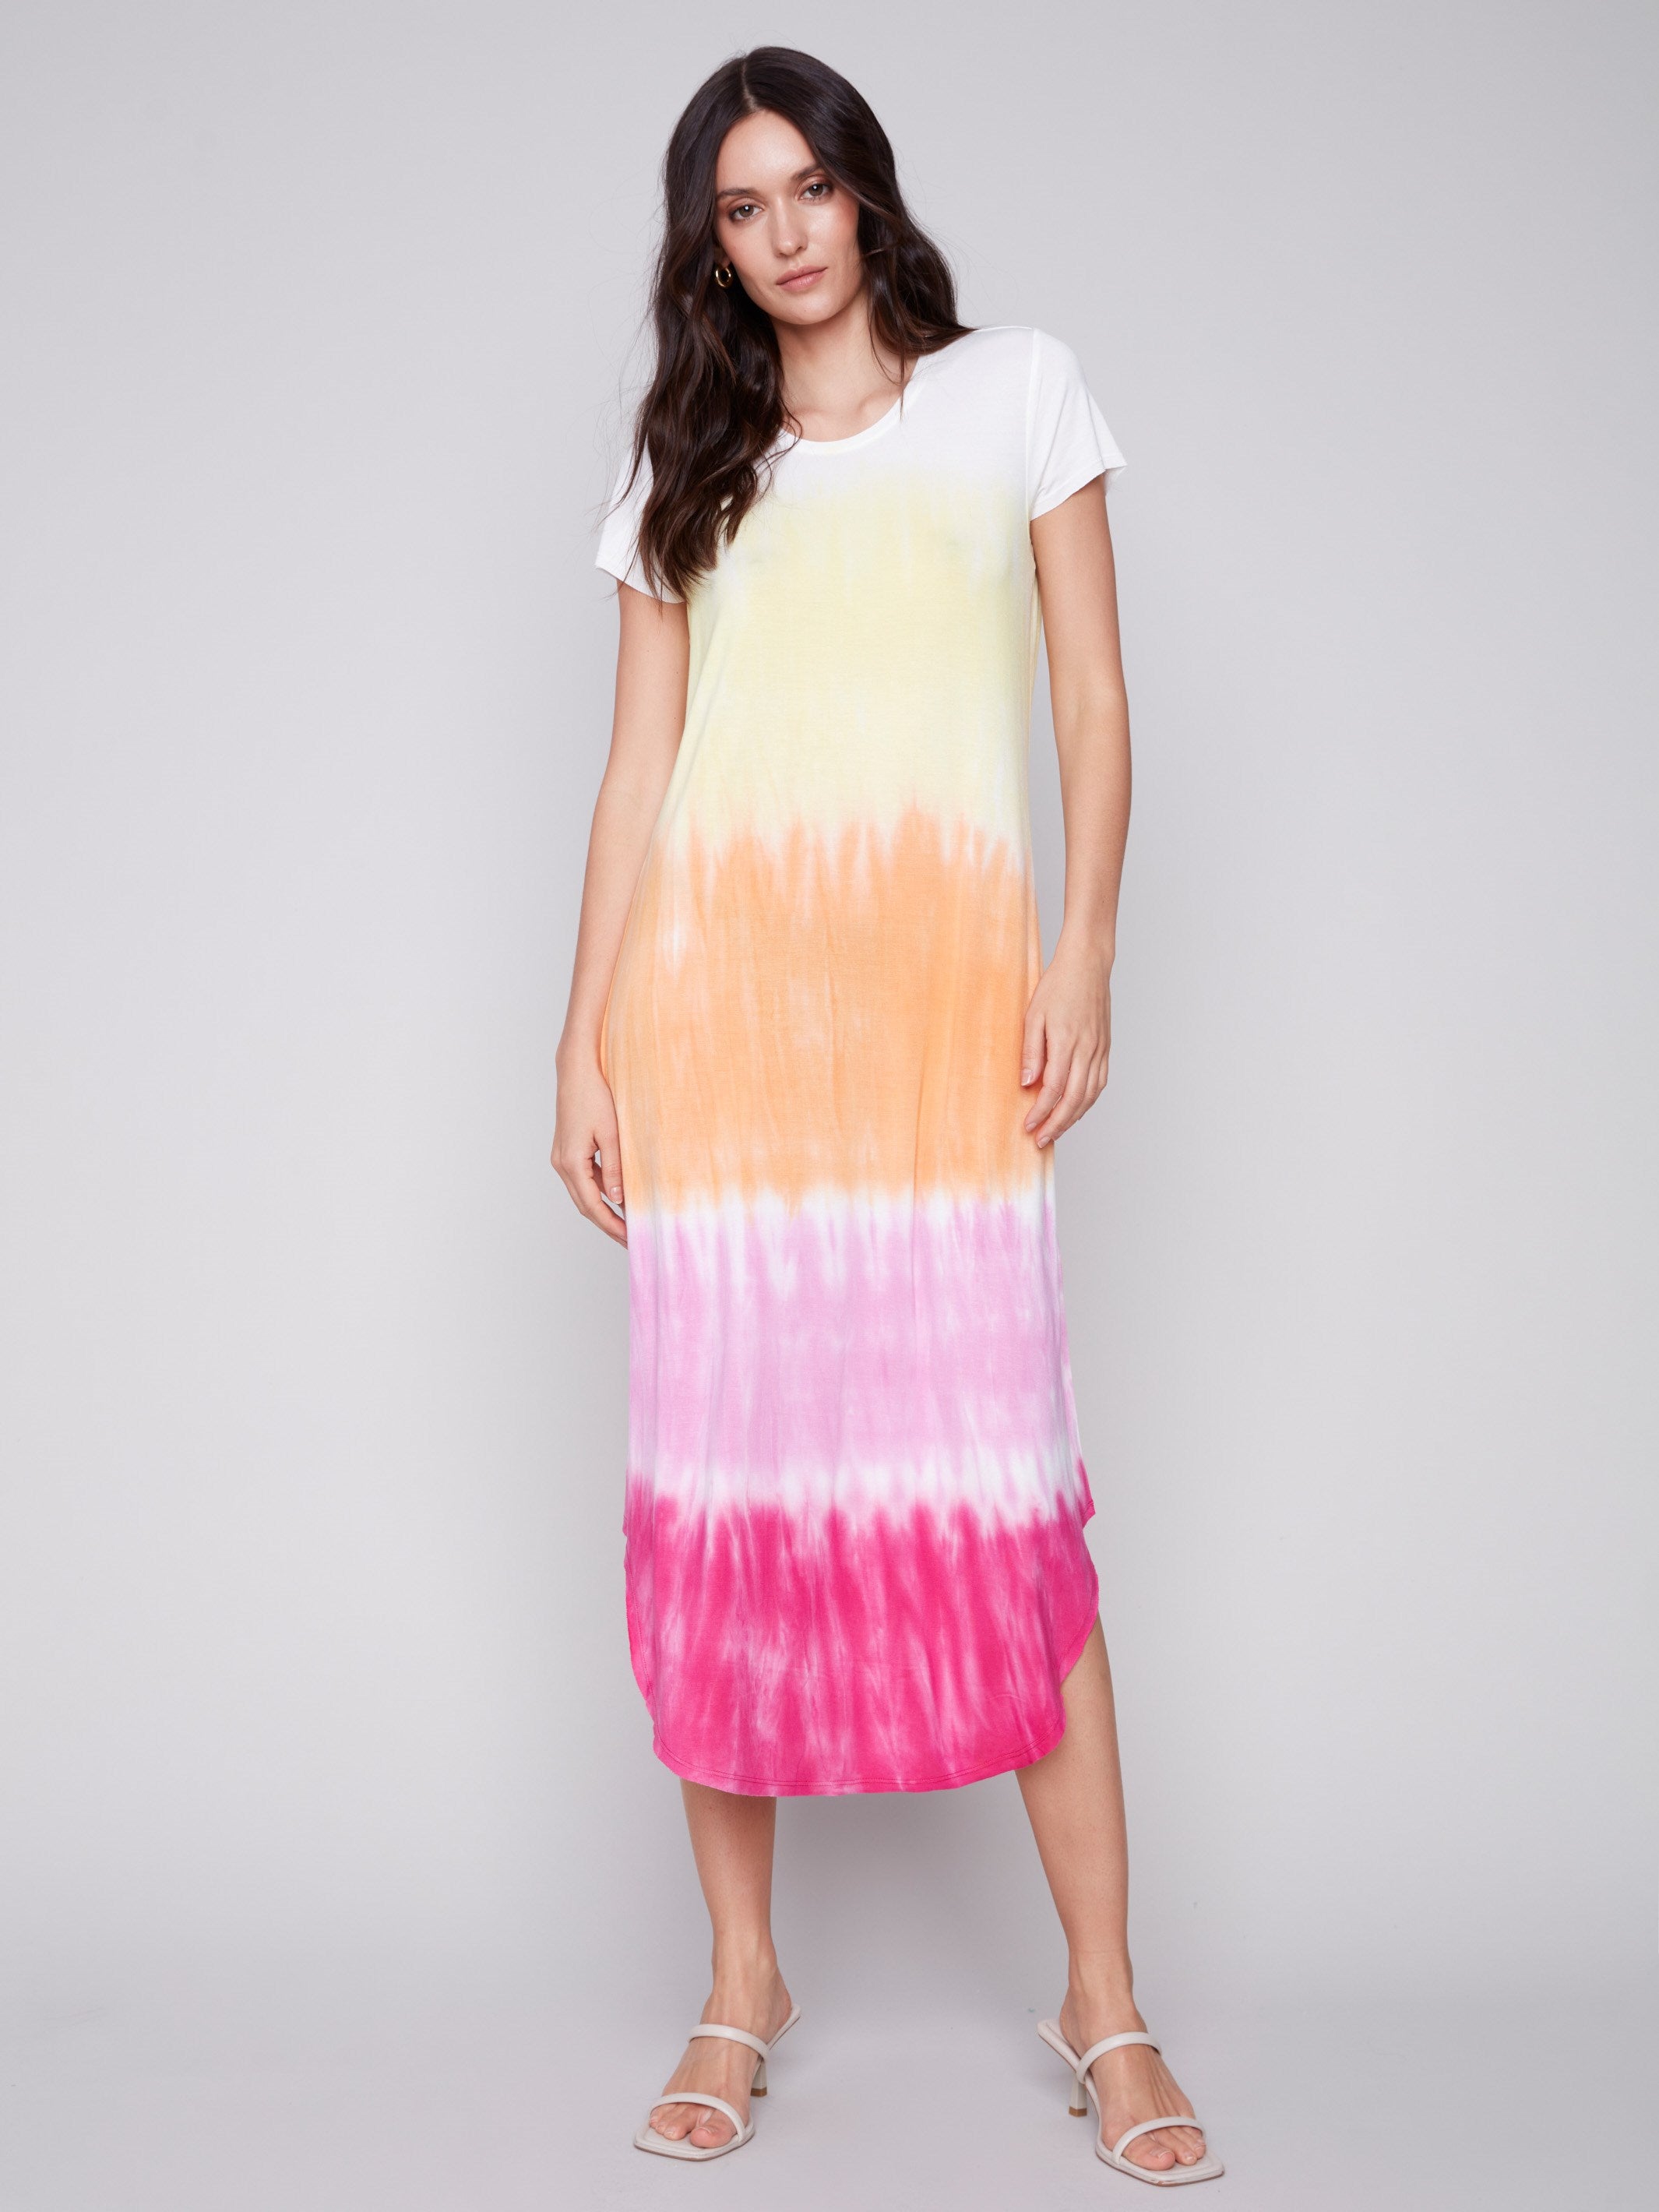 Tie-Dye Cotton Slub Dress - Sunset - Charlie B Collection Canada - Image 1